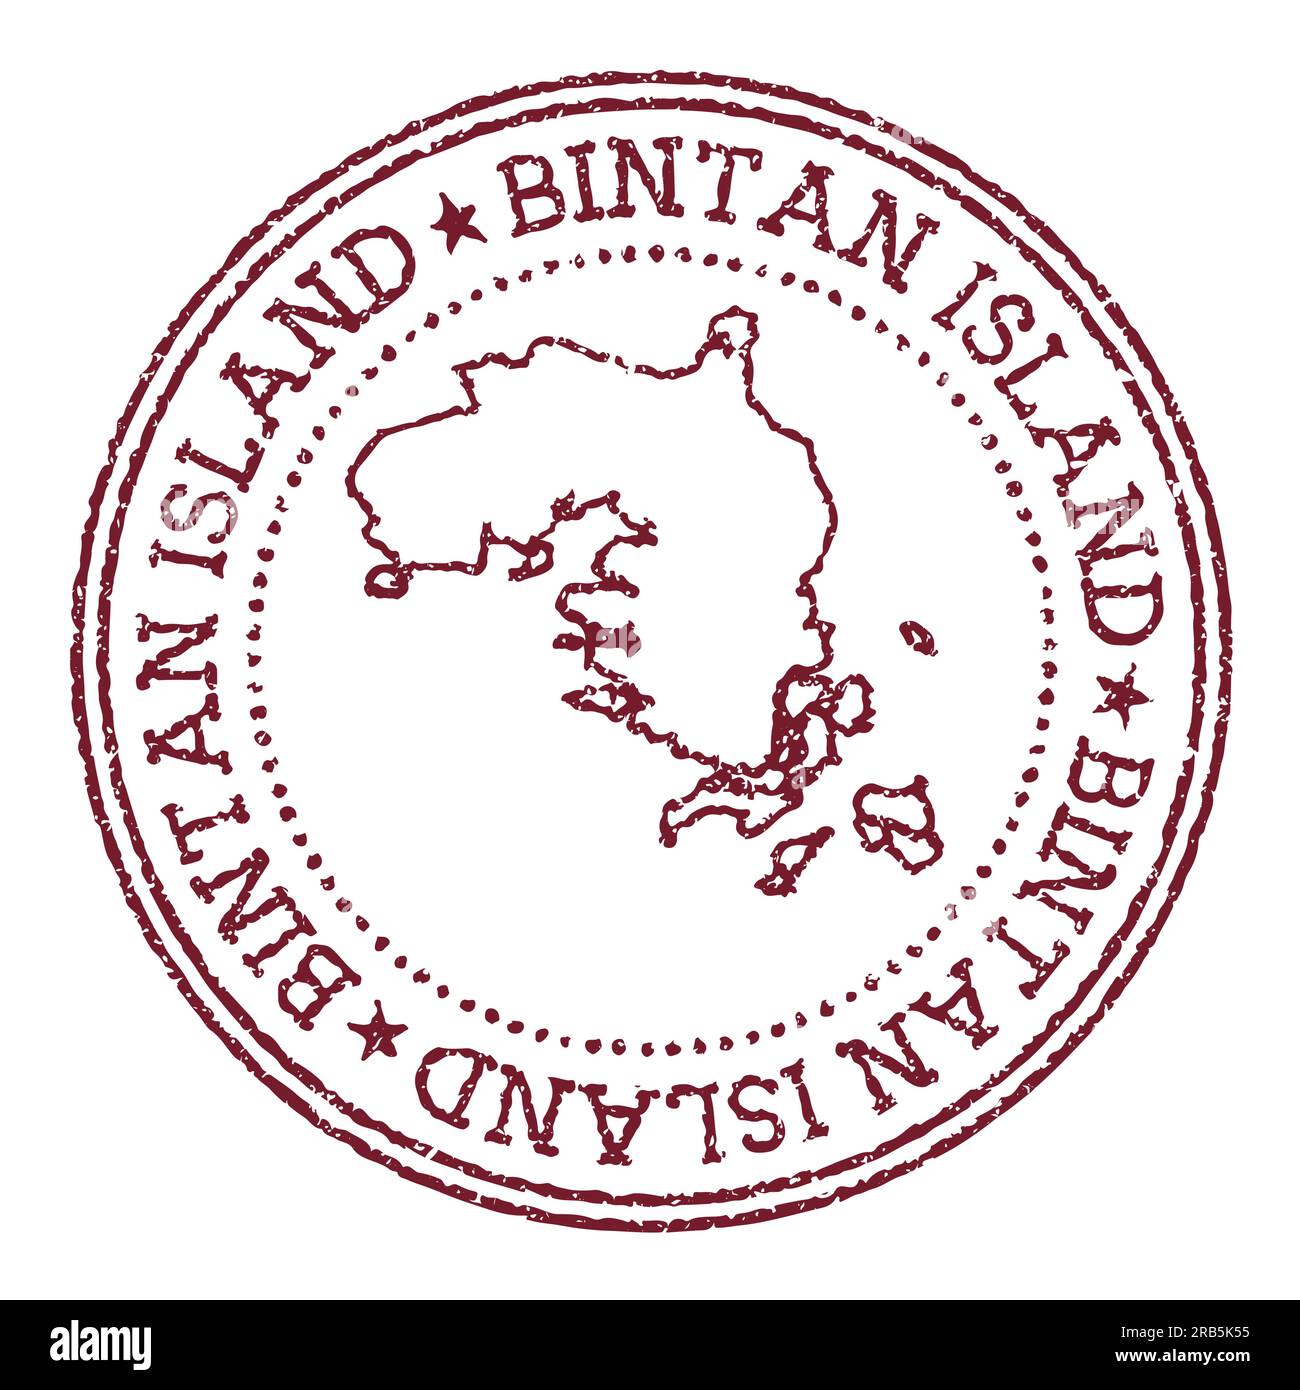 Bintan Island Rundstempel mit Inselkarte. Vintage-roter Passstempel mit kreisförmigem Text und Sternen, Vektorgrafik. Stock Vektor